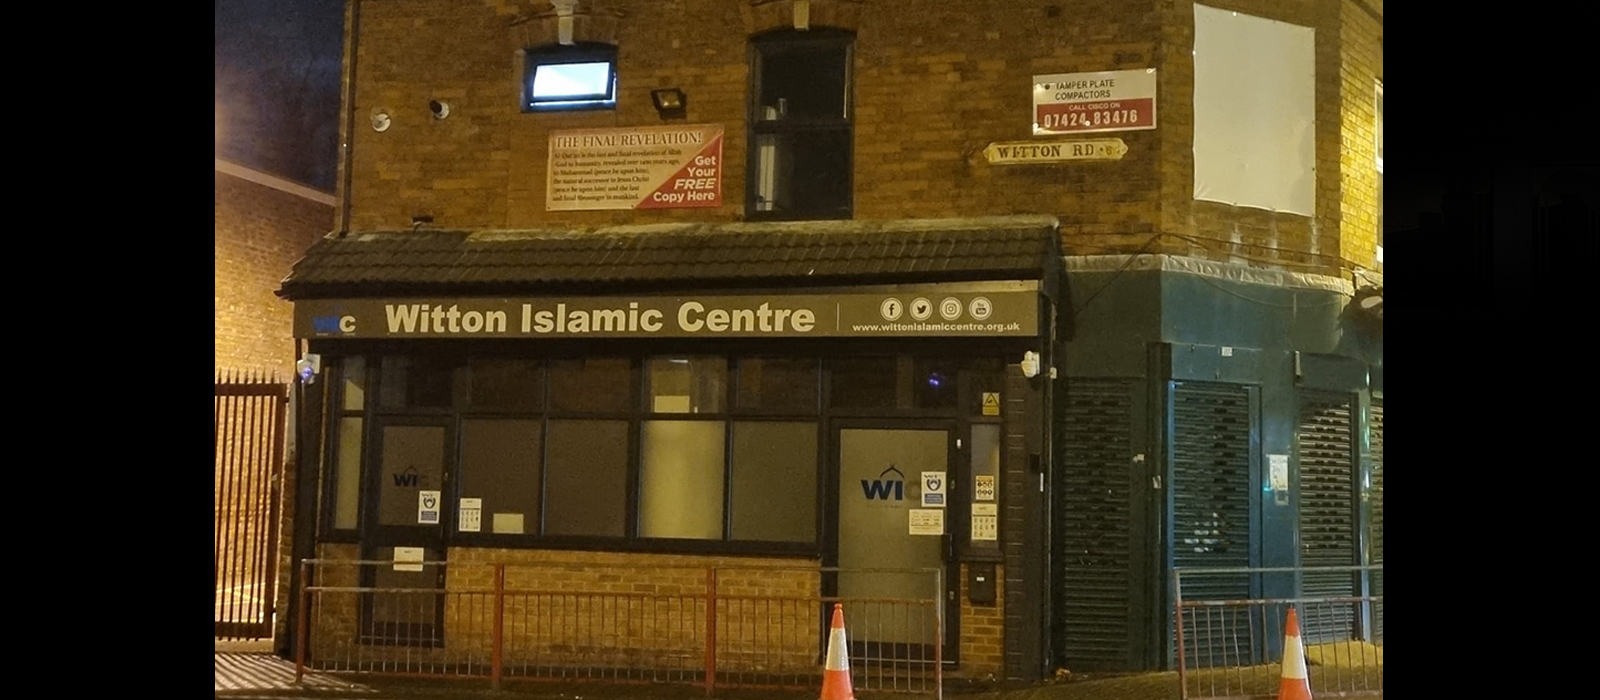 Wittion Islamic Centre in Aston, Birmingham